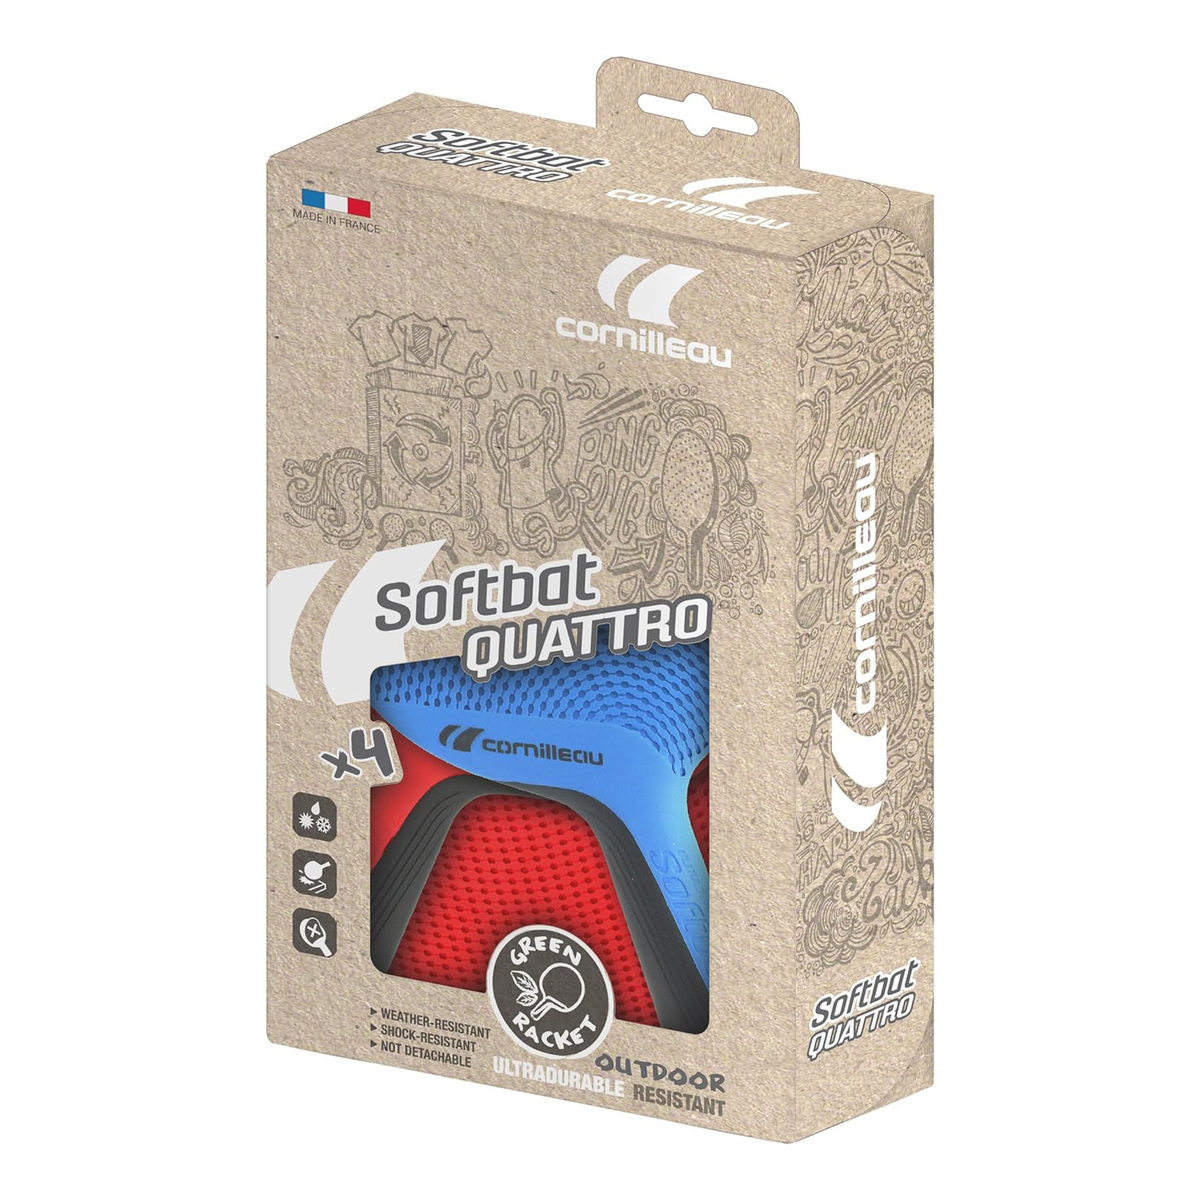 Cornilleau Softbat Pack Quattro, 4 Bats + 4 Balls, Red/Blue, 47554